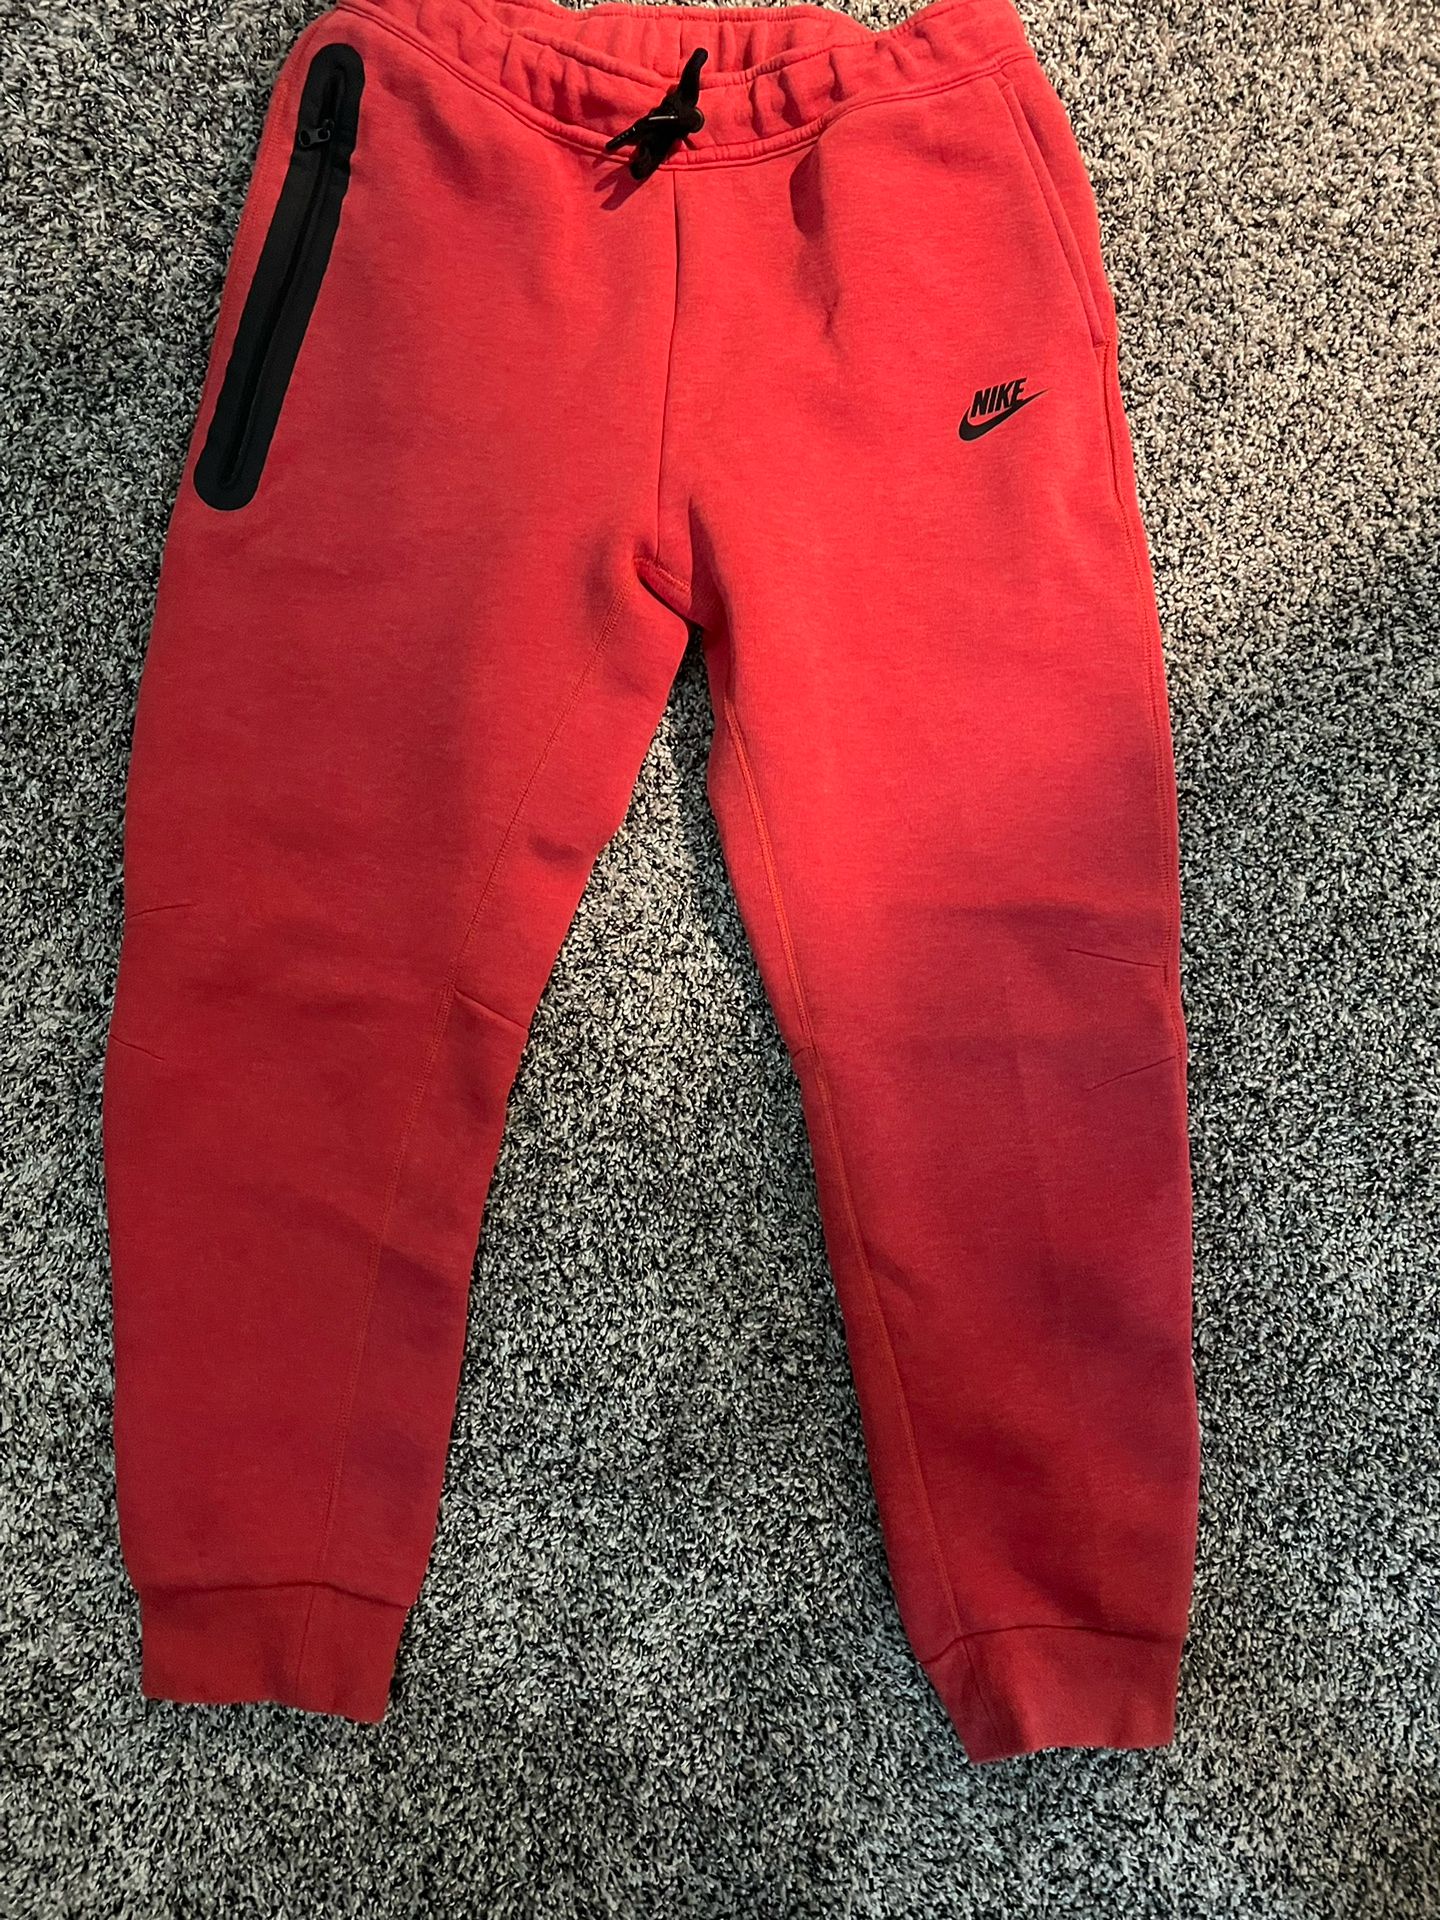 red nike tech fleece pants adult small